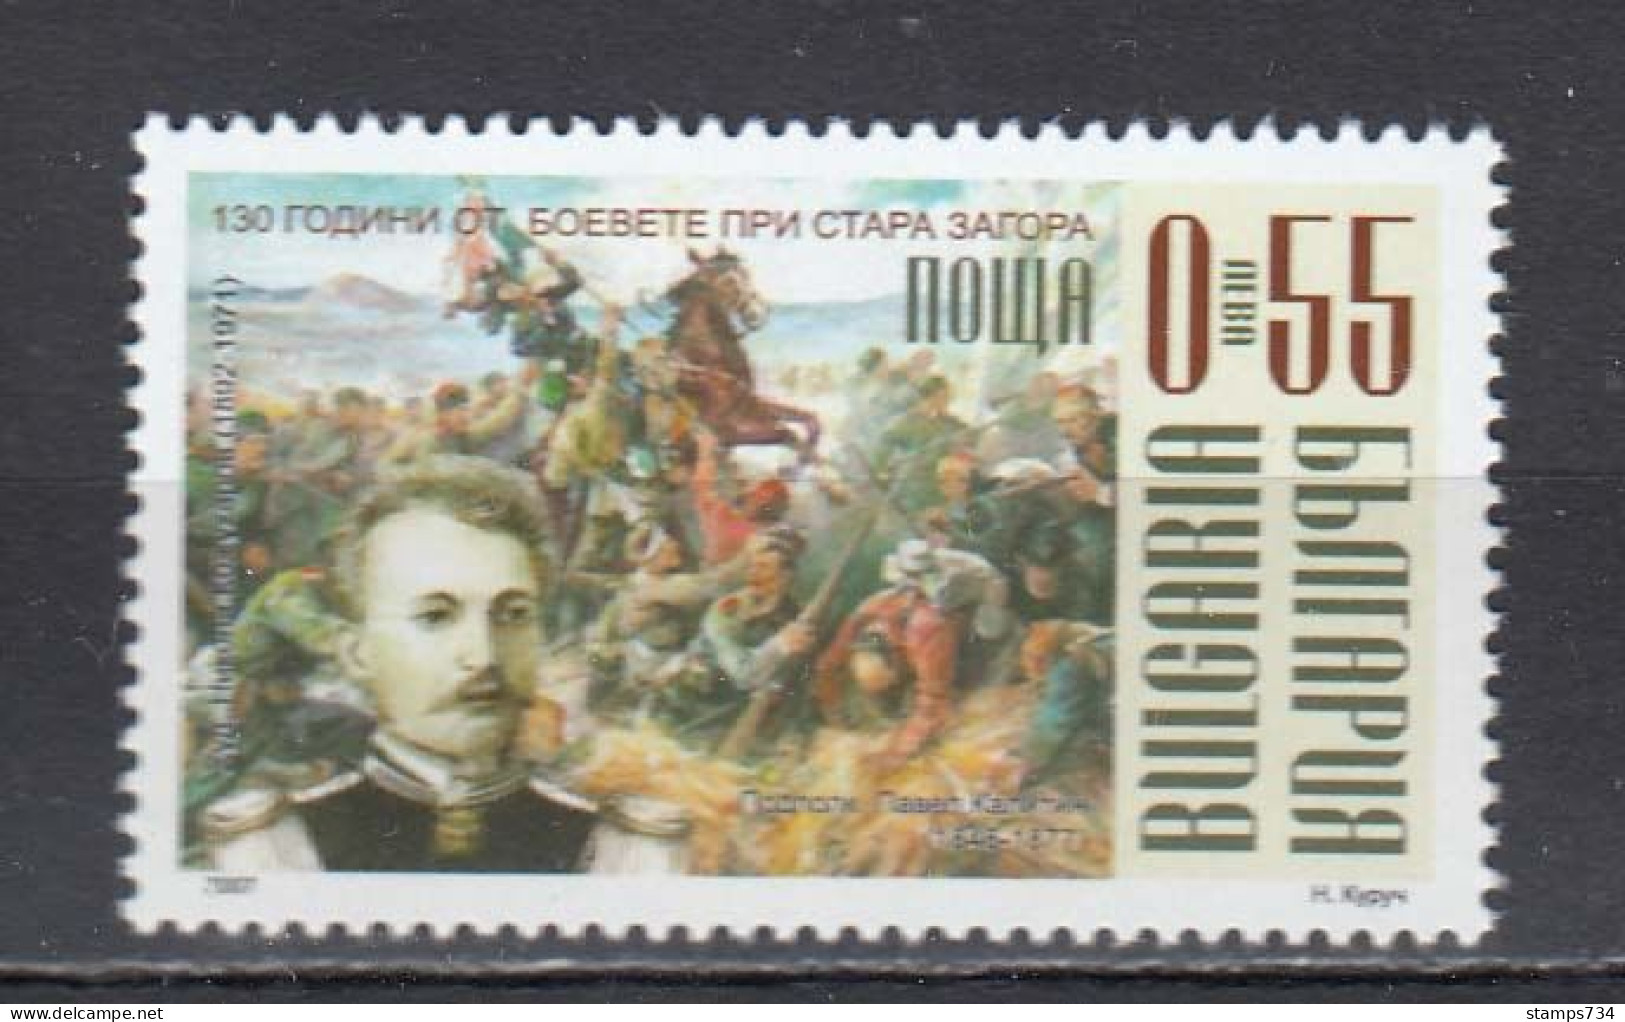 Bulgaria 2007 - 130th Anniversary Of The Battle Of Stara Zagora, Mi-Nr. 4818, MNH** - Unused Stamps